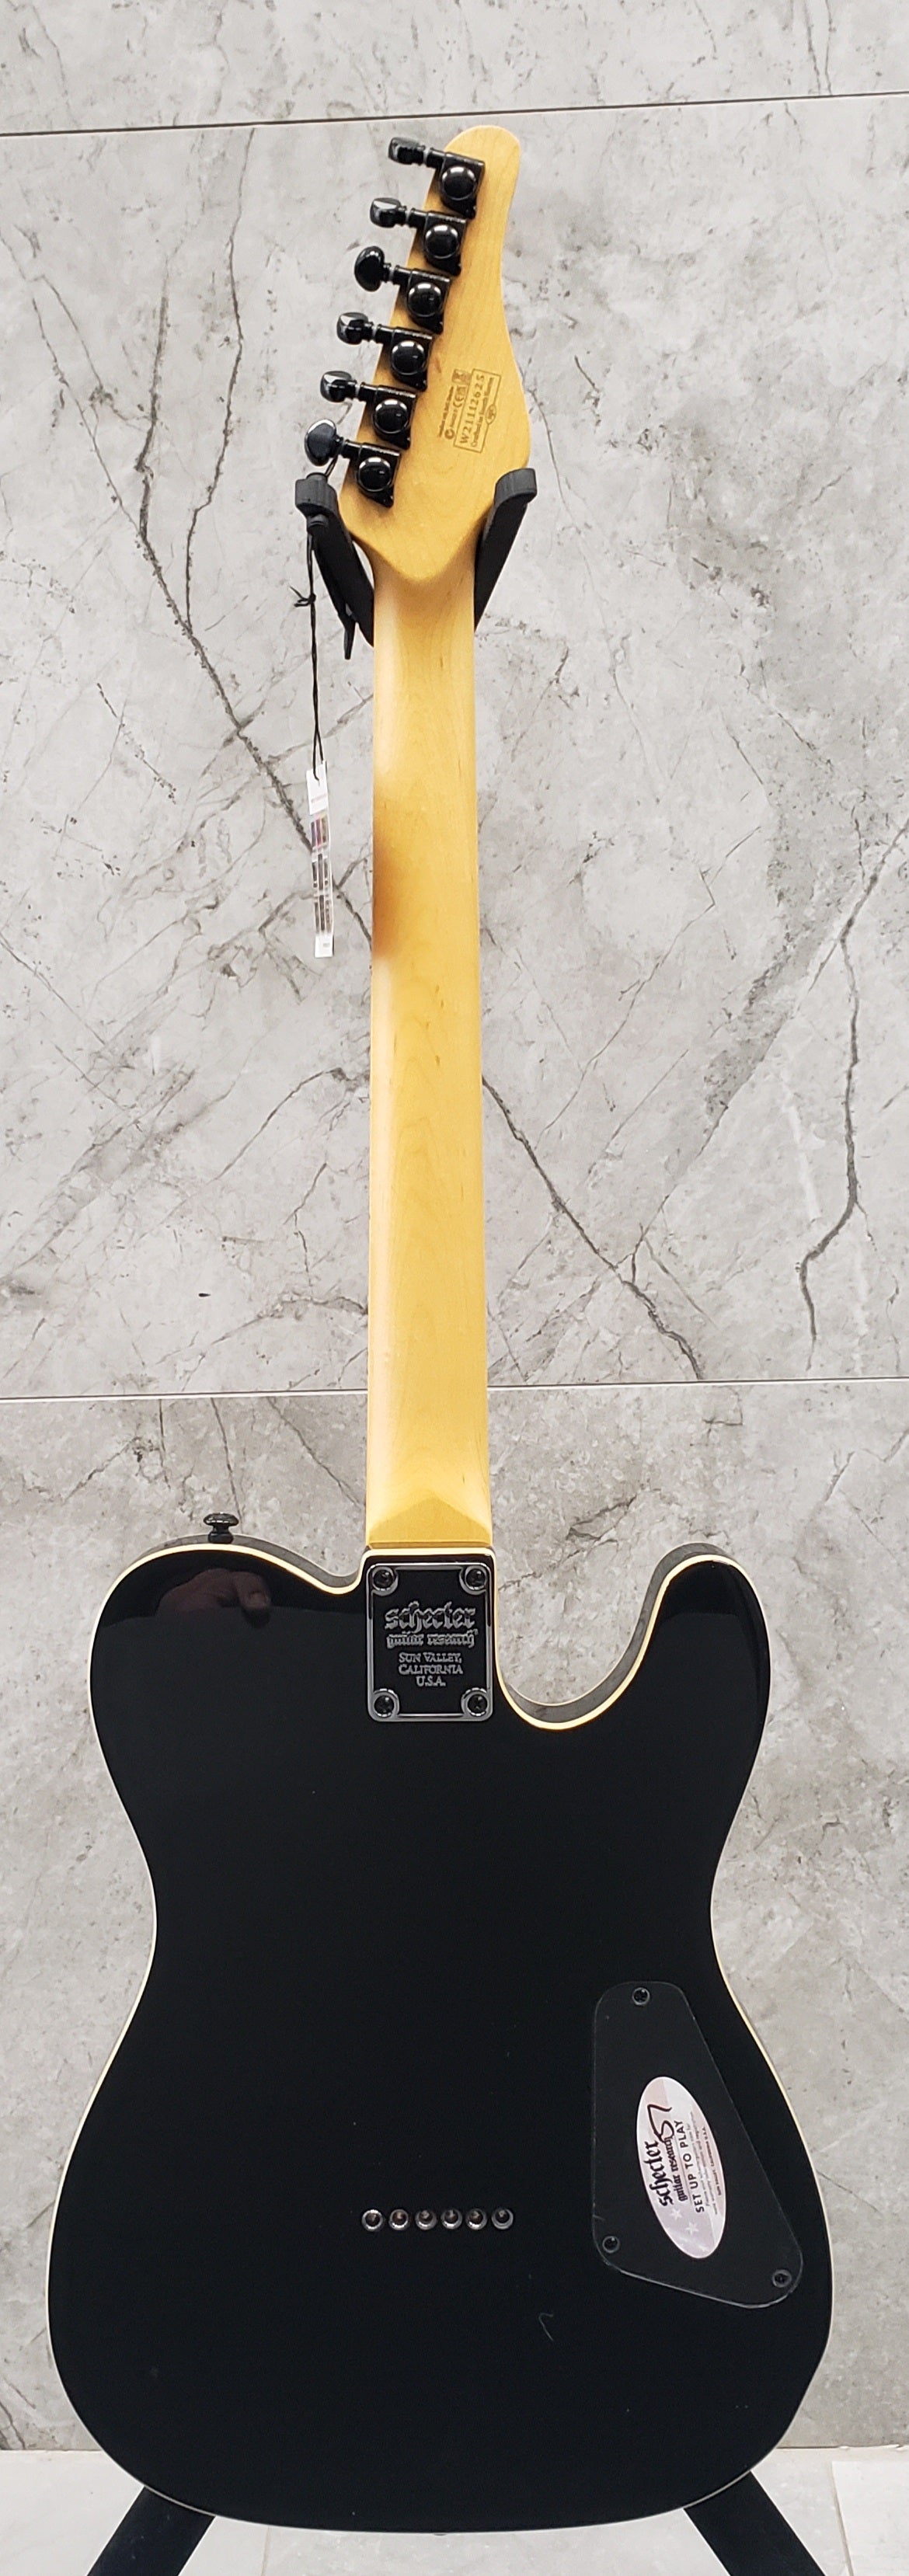 Schecter PT-MM-LH-BLK LEFT HANDED PT Gloss Black Guitar 2200-SHC